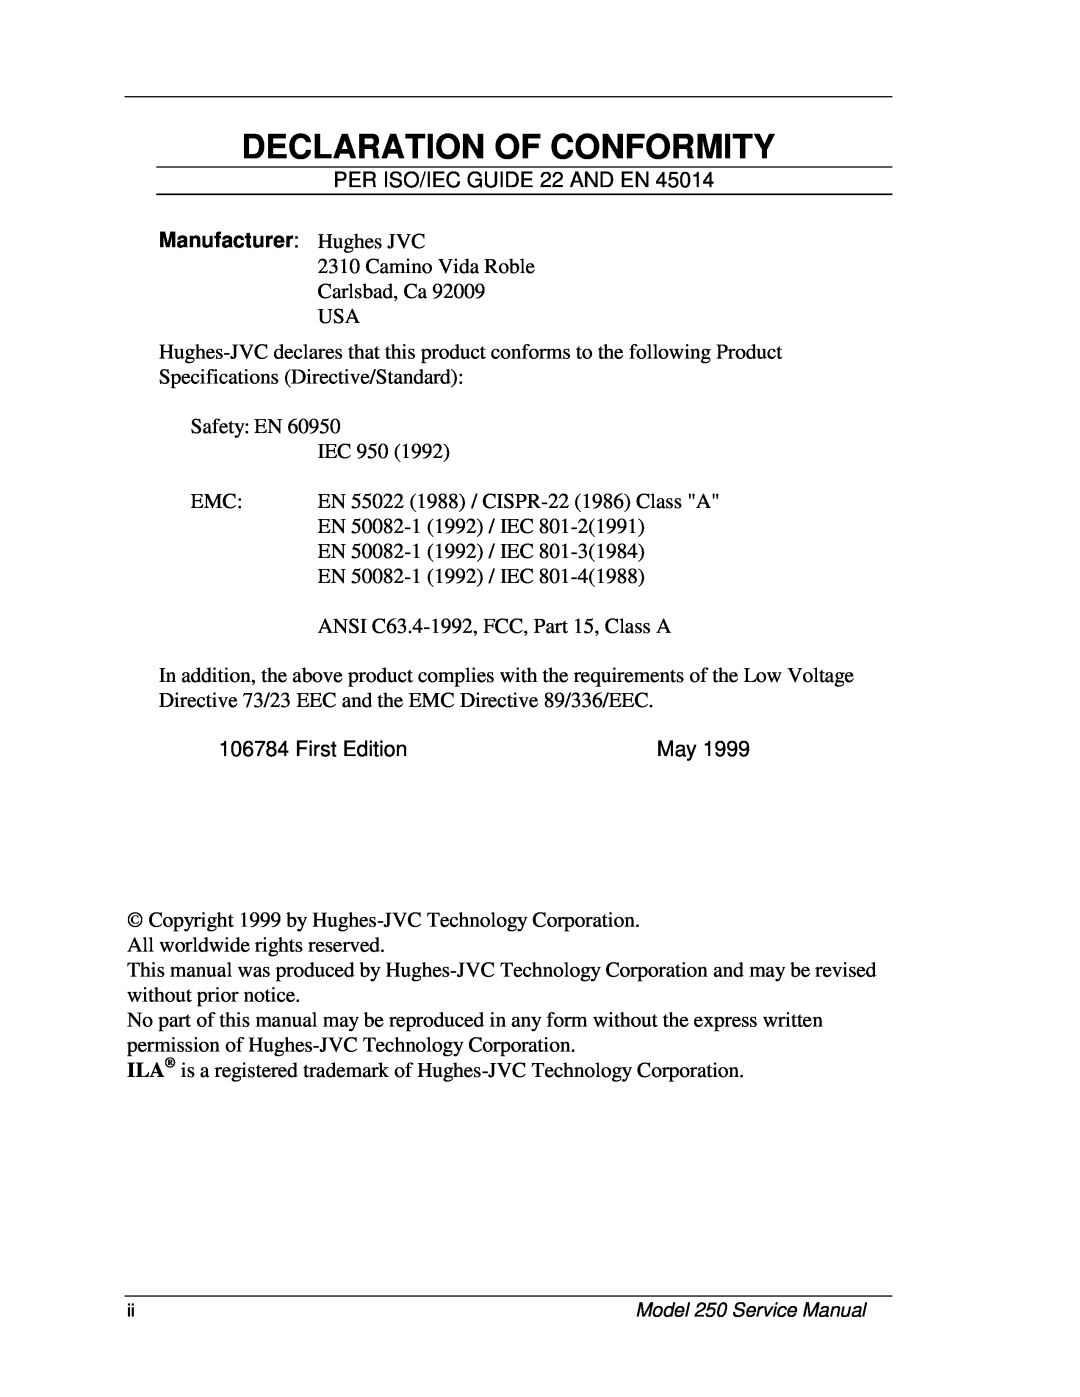 JVC 250 service manual Manufacturer Hughes JVC, Declaration Of Conformity 